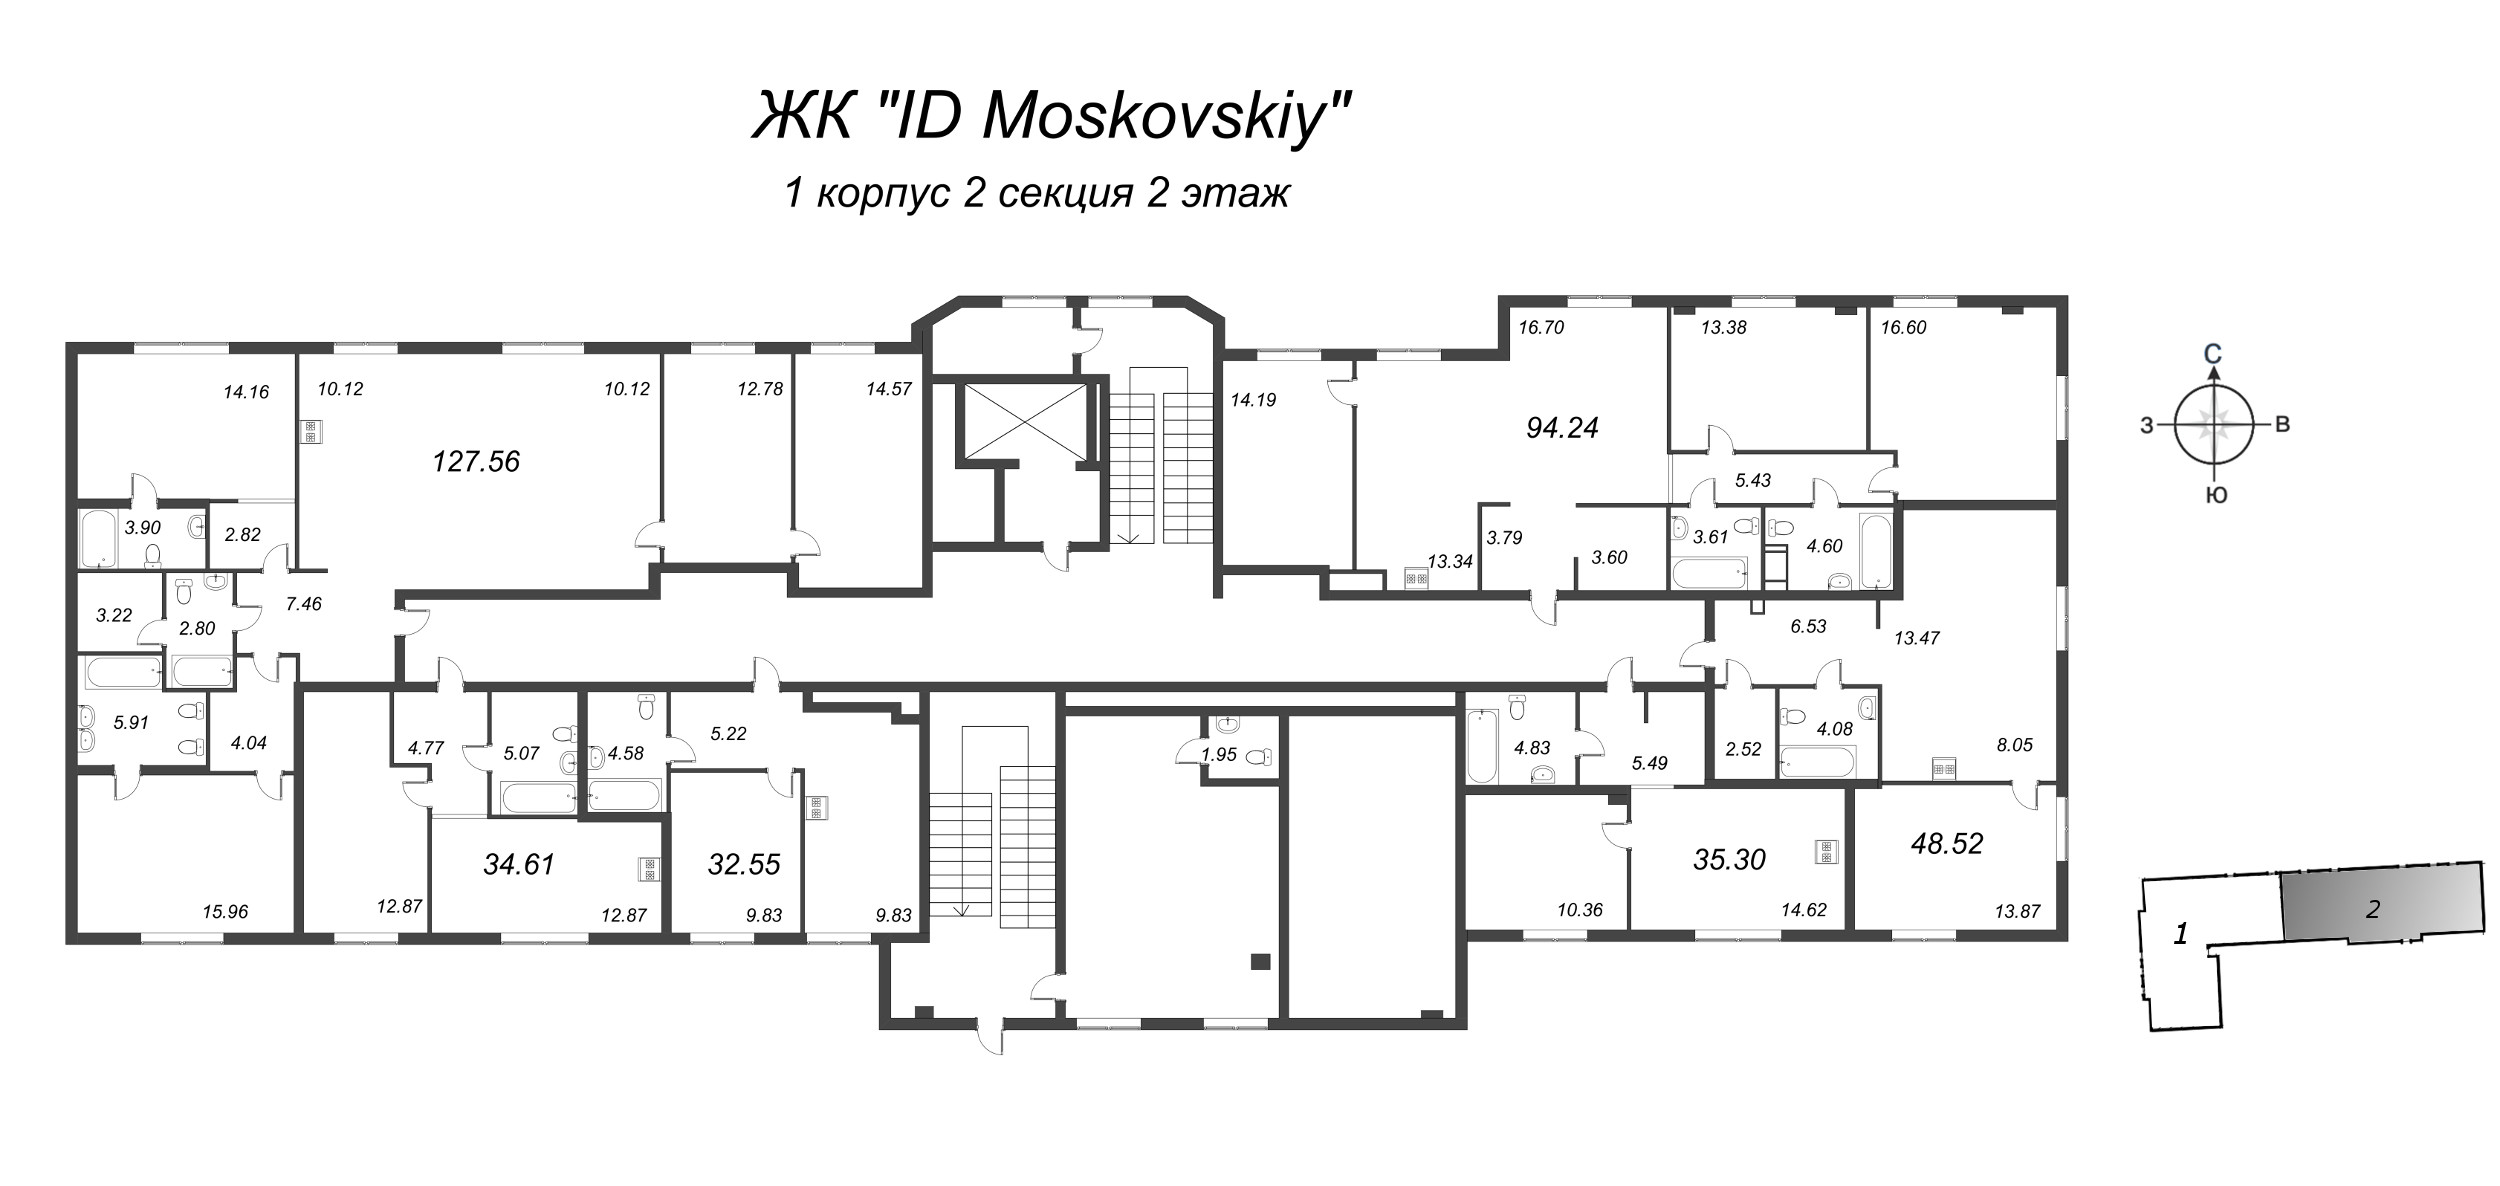 4-комнатная (Евро) квартира, 127.56 м² - планировка этажа